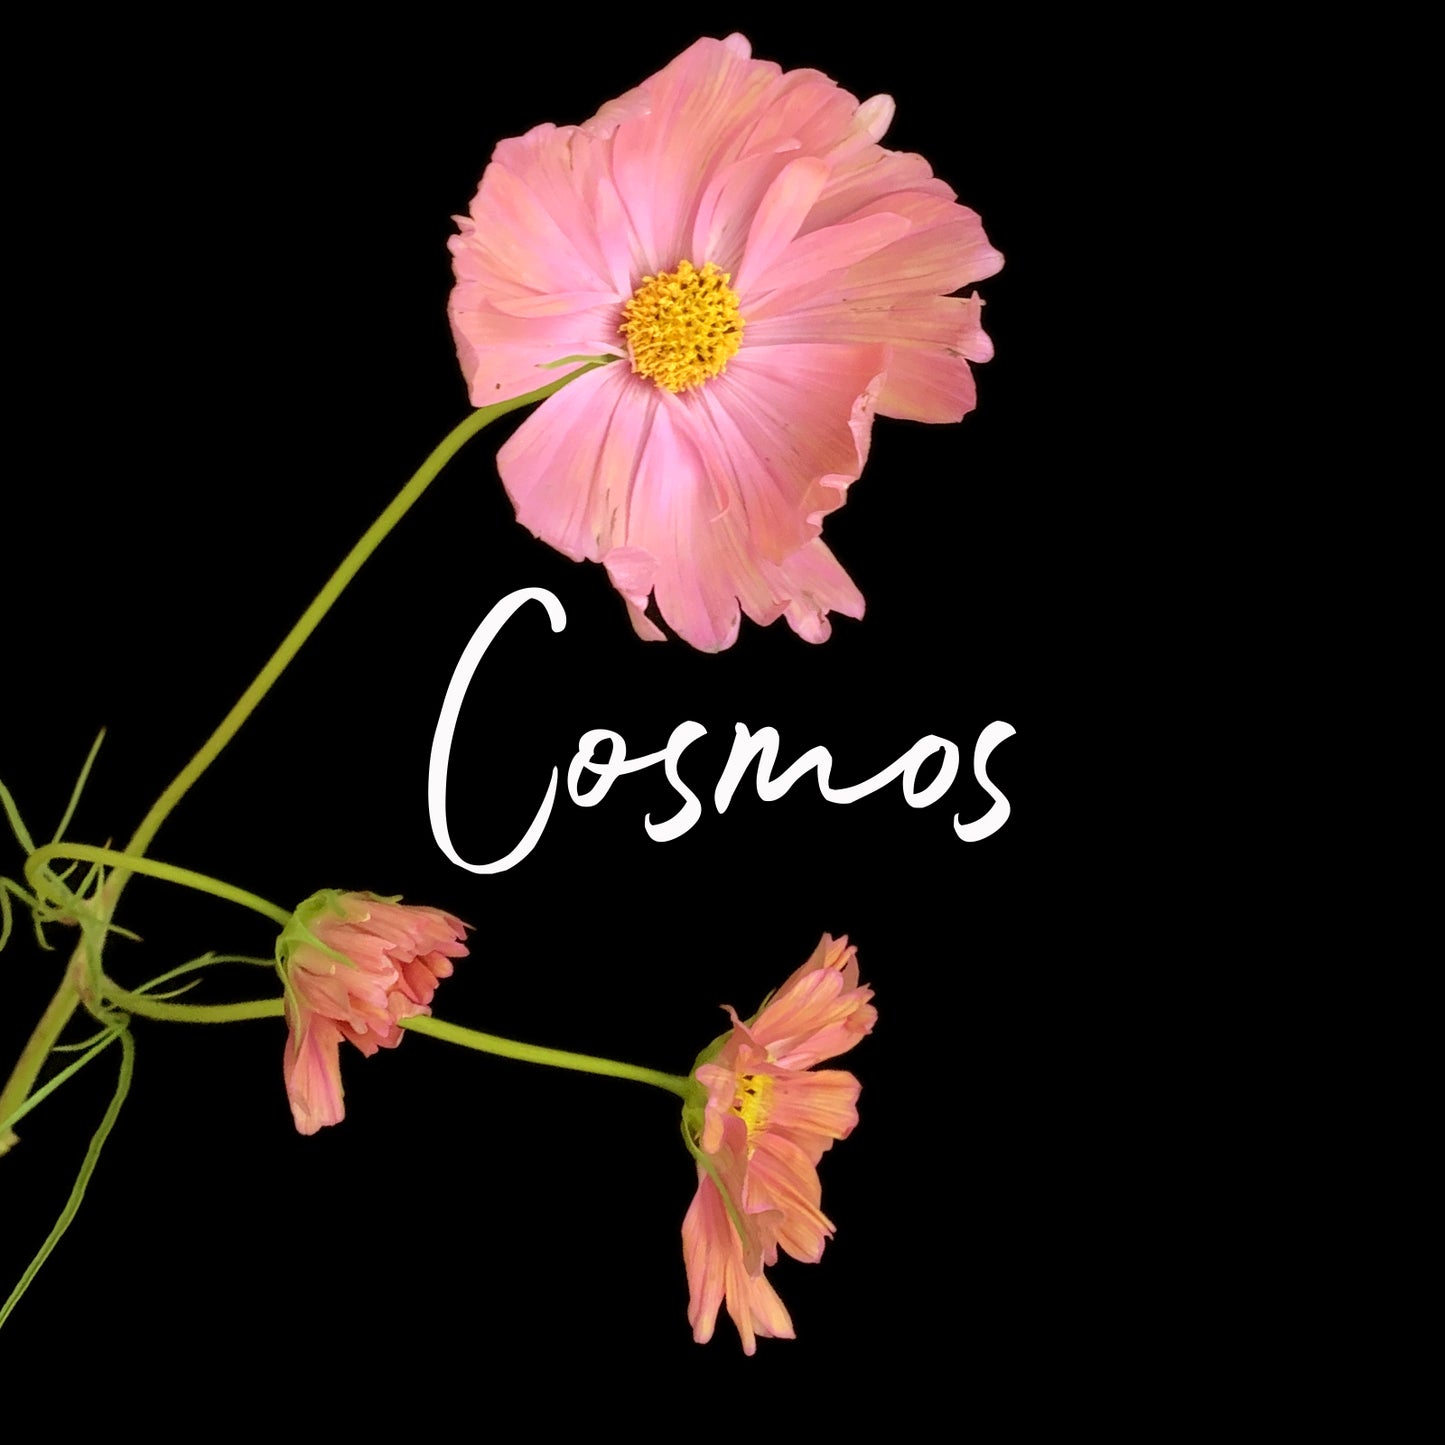 Behind the Bloom: Cosmos